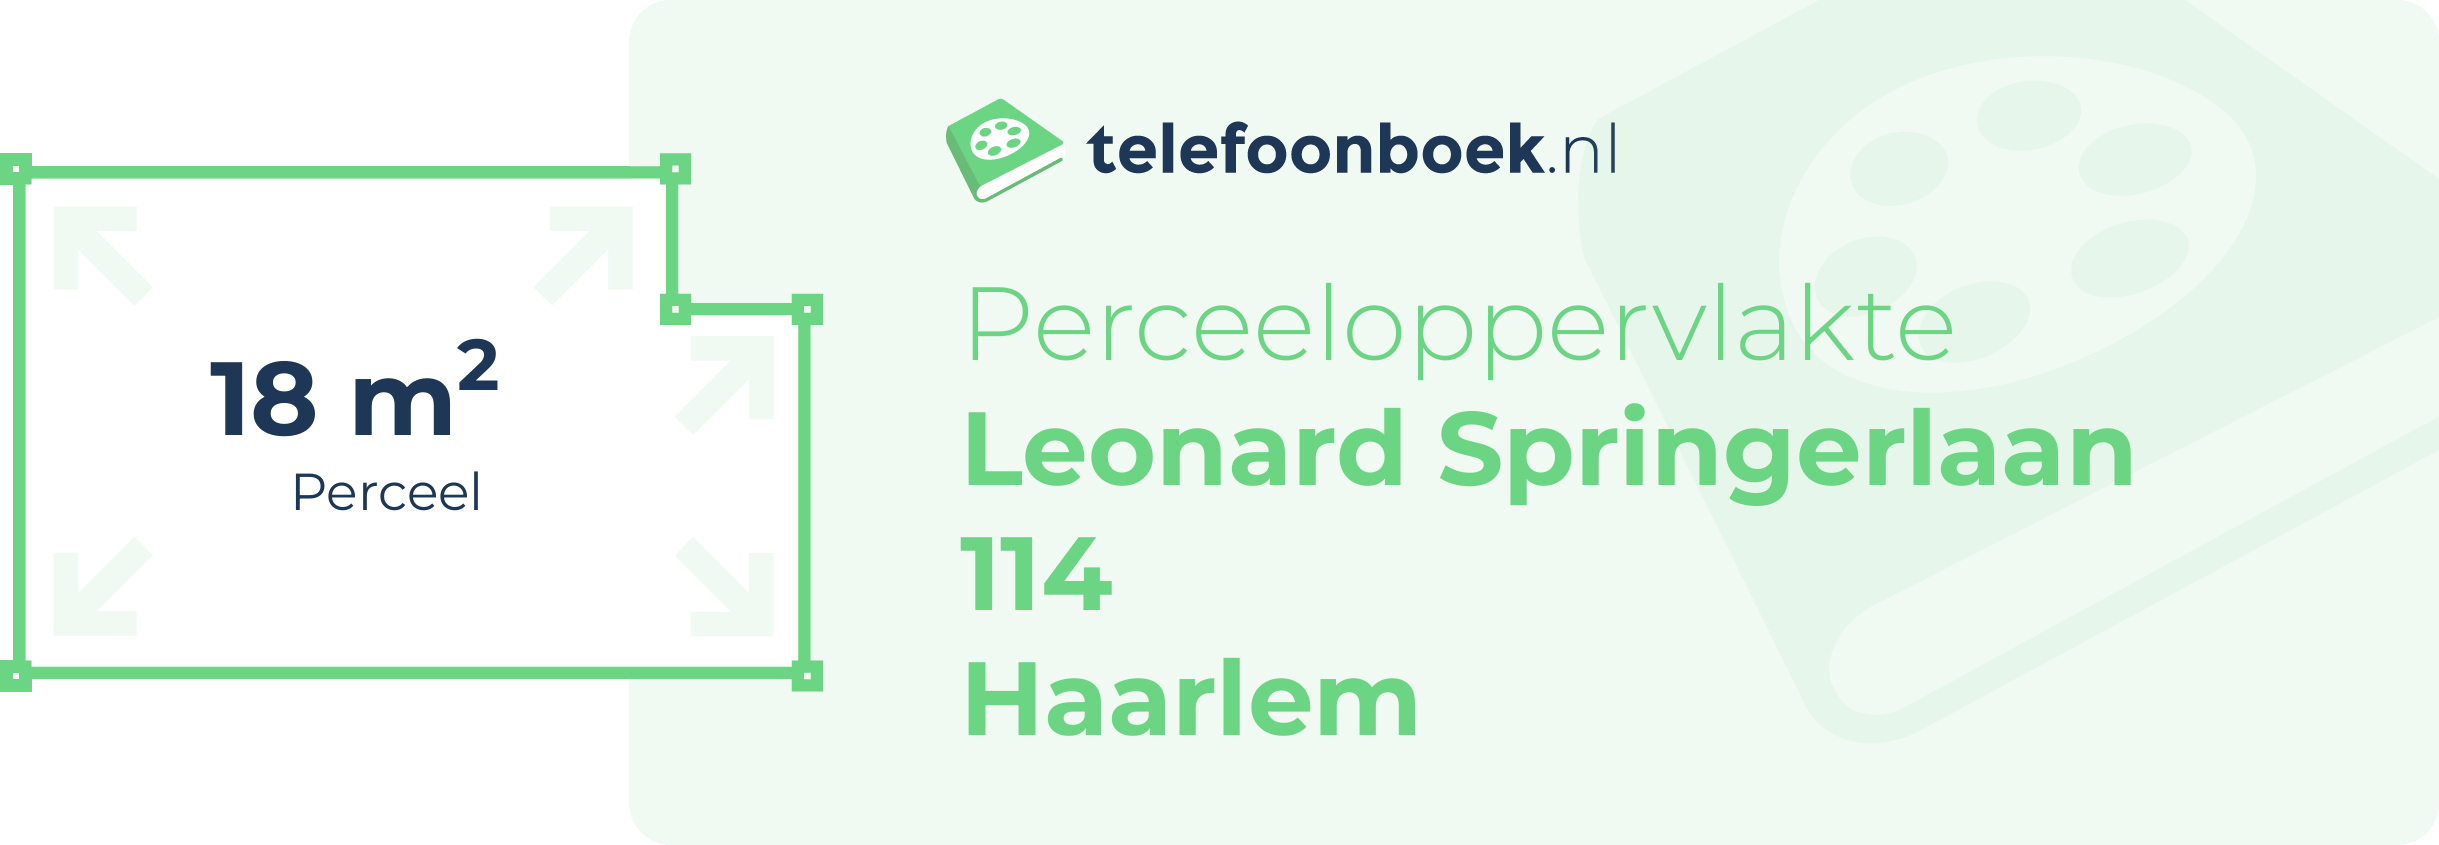 Perceeloppervlakte Leonard Springerlaan 114 Haarlem